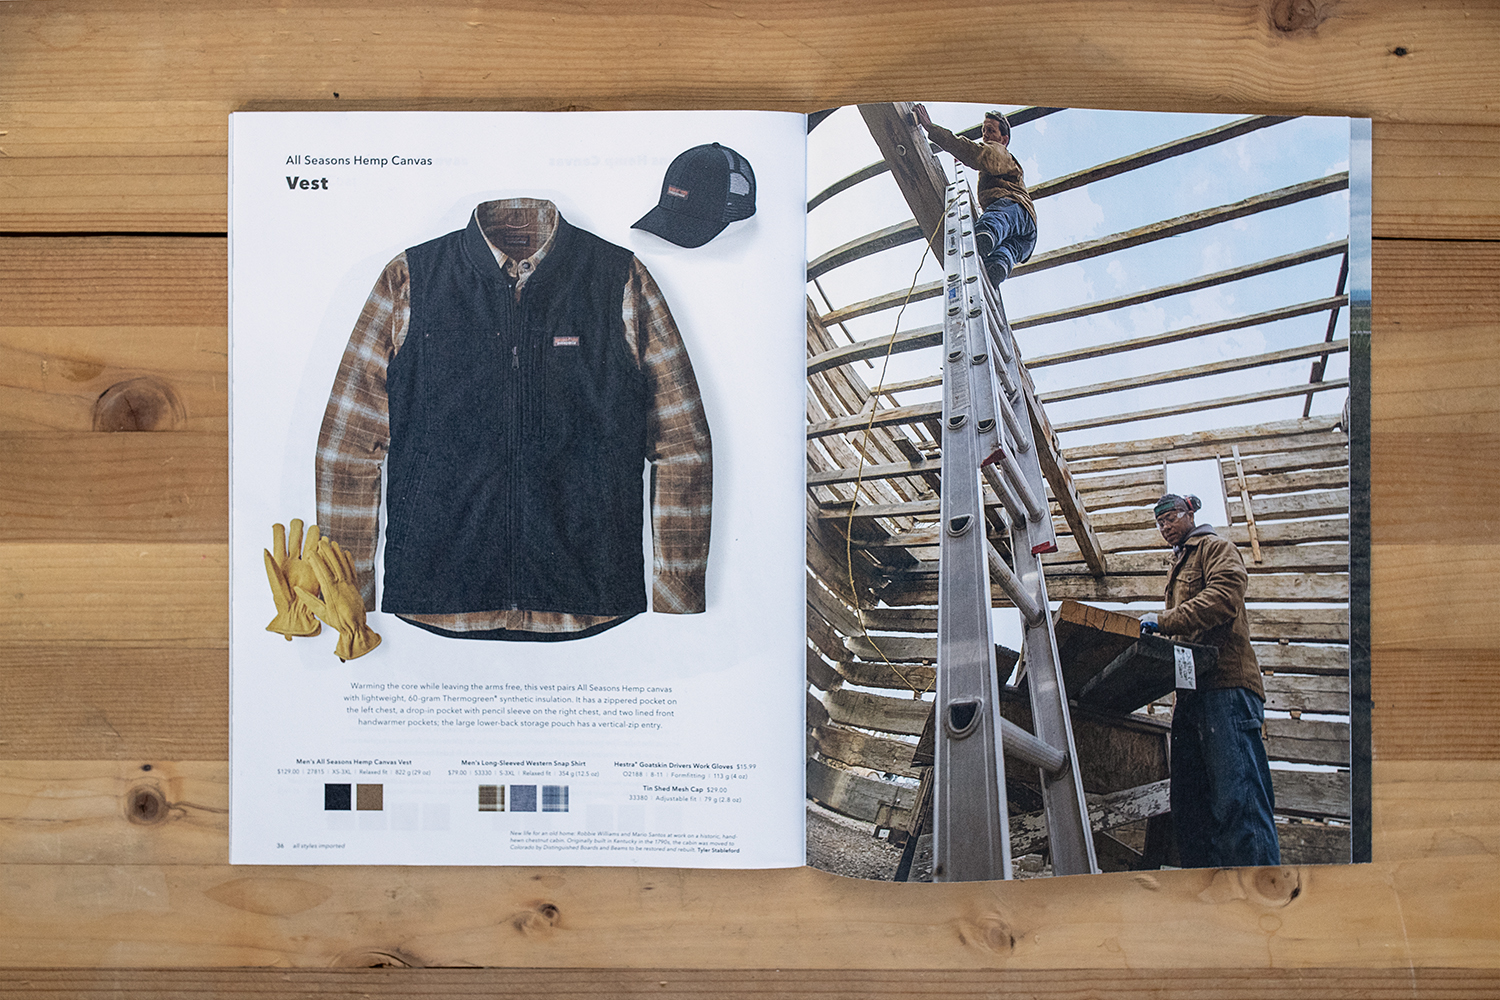 Stableford workwear image in Patagonia catalog